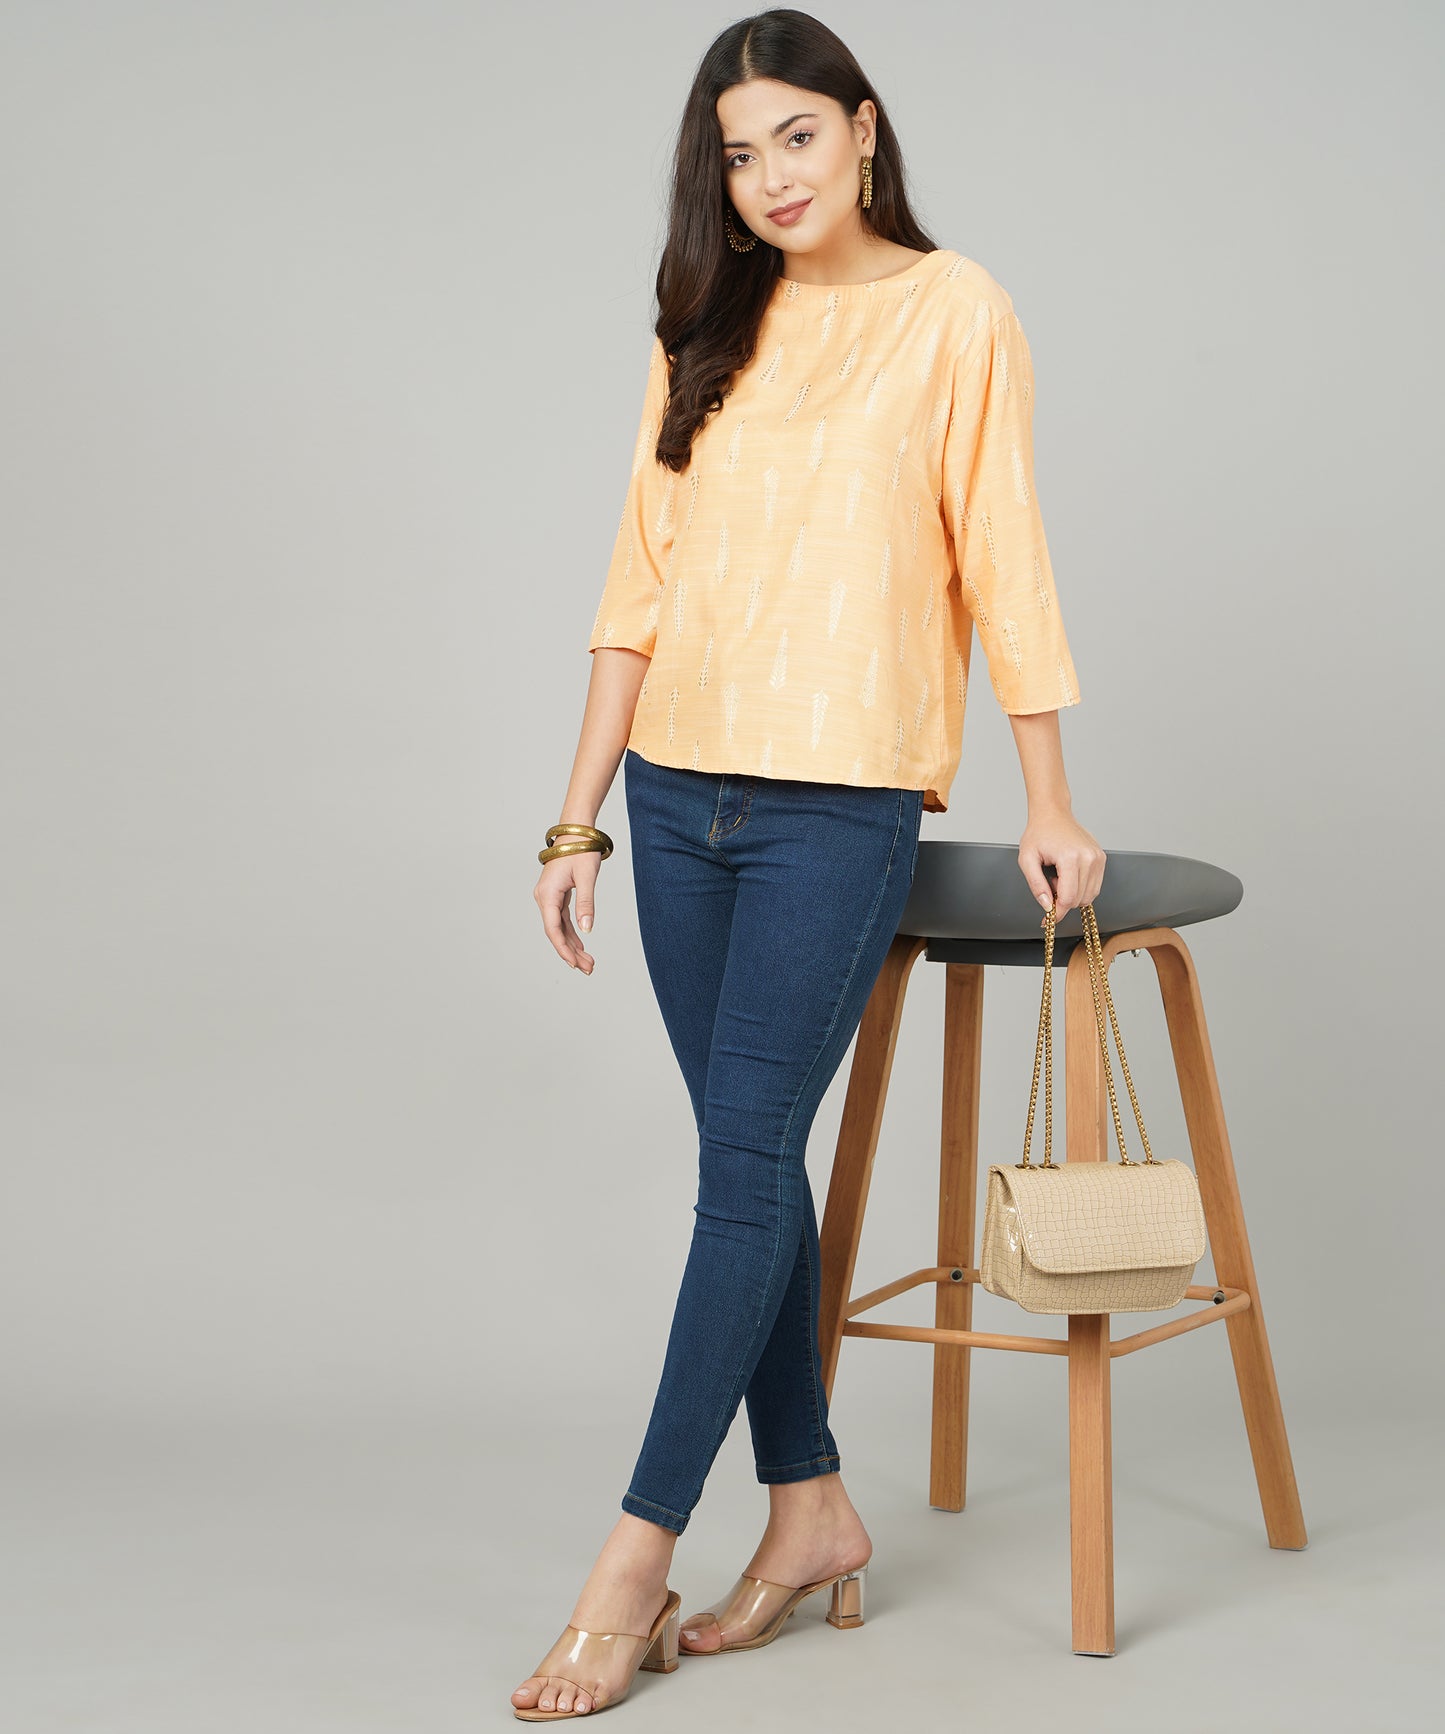 Anushil Foil Printed Orange Cotton Kurti/Top for Women/Girls - Stylish and Comfortable